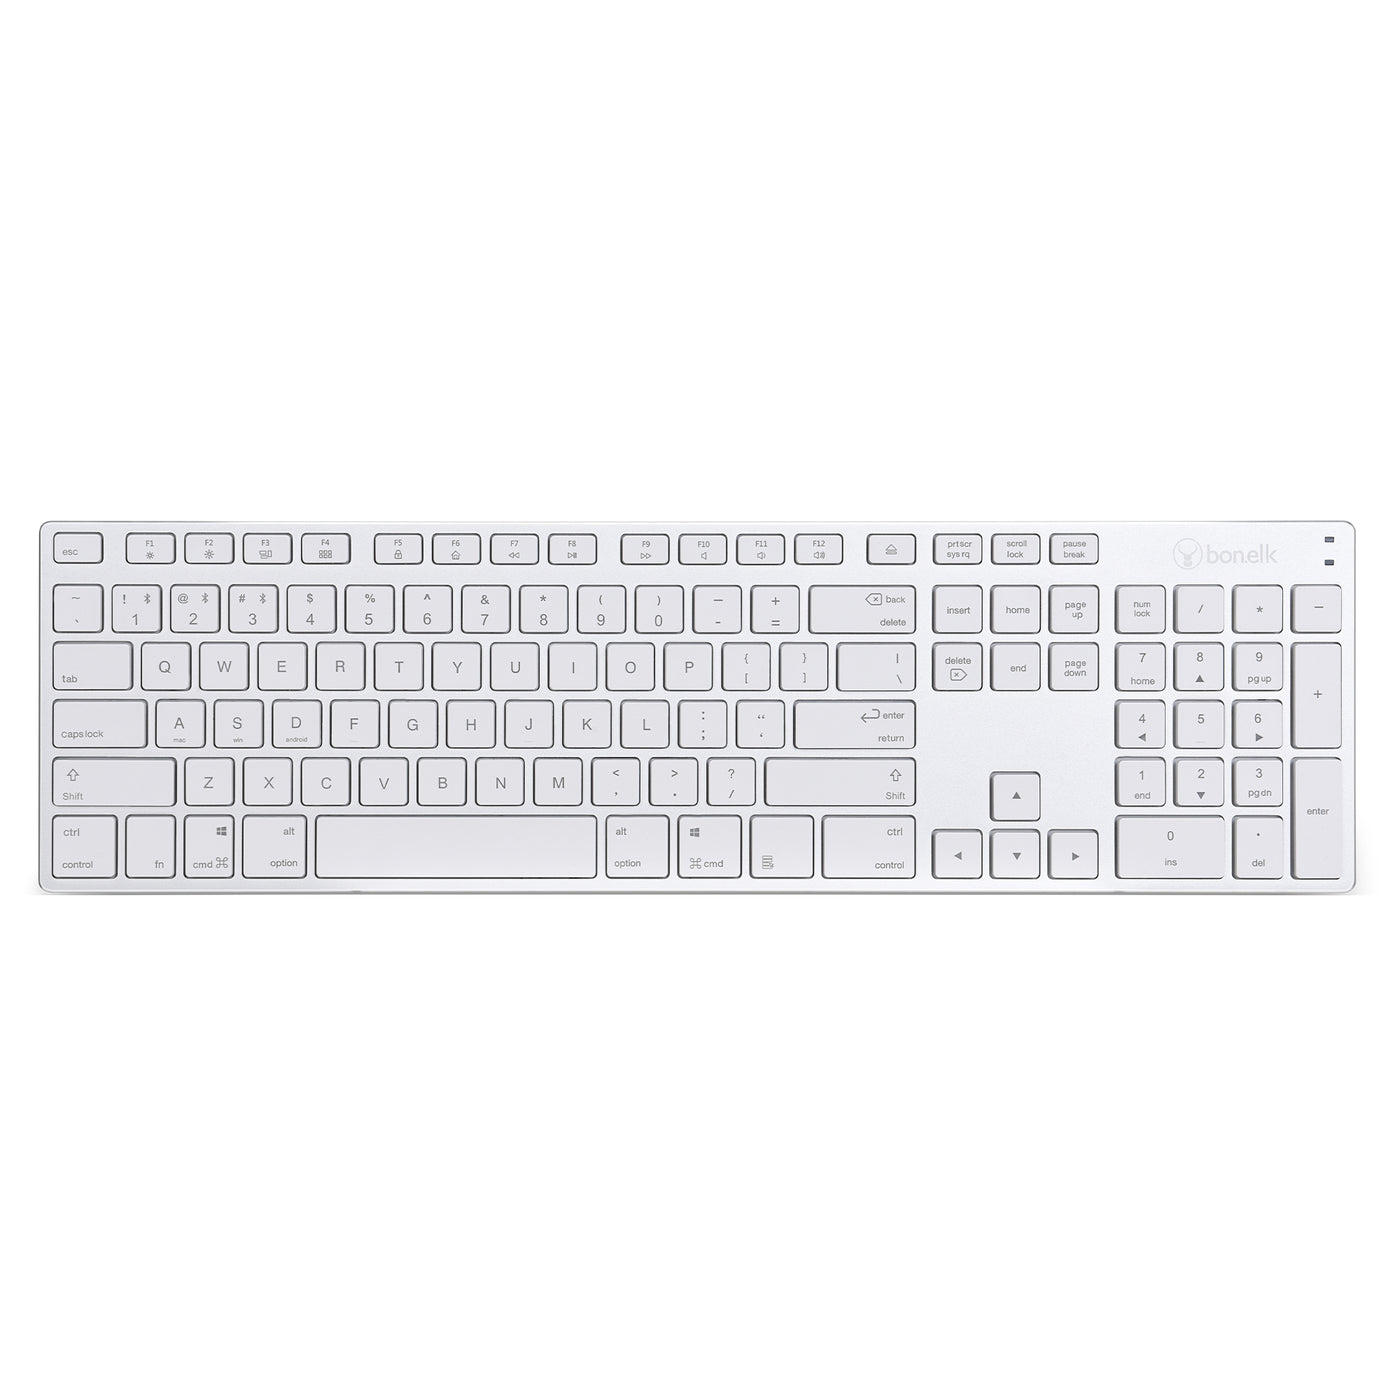 Bonelk Aluminium Bluetooth Keyboard and Mouse Combo, Full Size, KM-517A - Silver